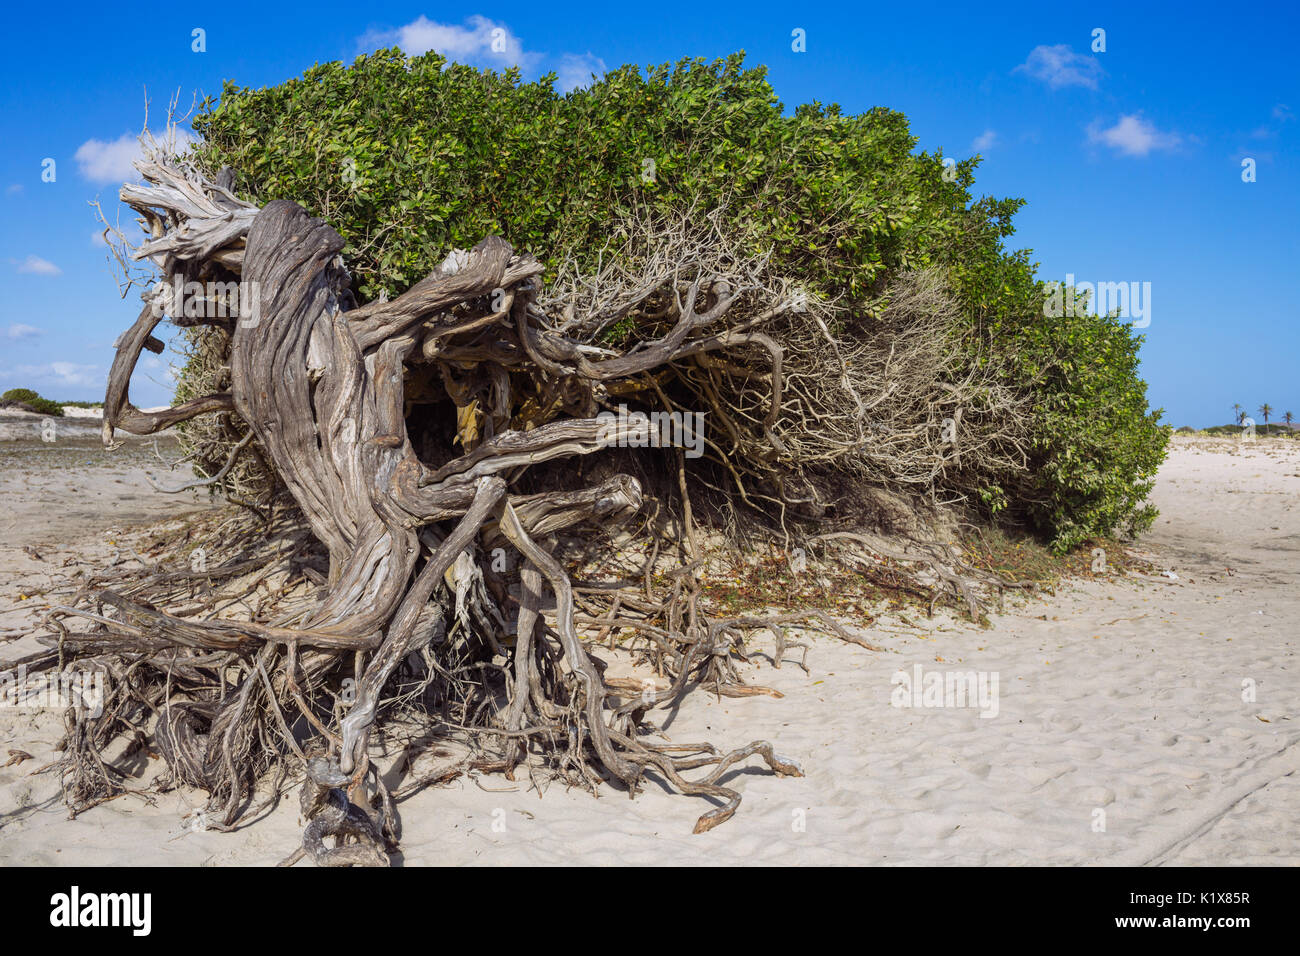 L'albero pigro (Arvore da Preguiça) nella spiaggia di Jericoacoara, Ceará, Brasile Foto Stock